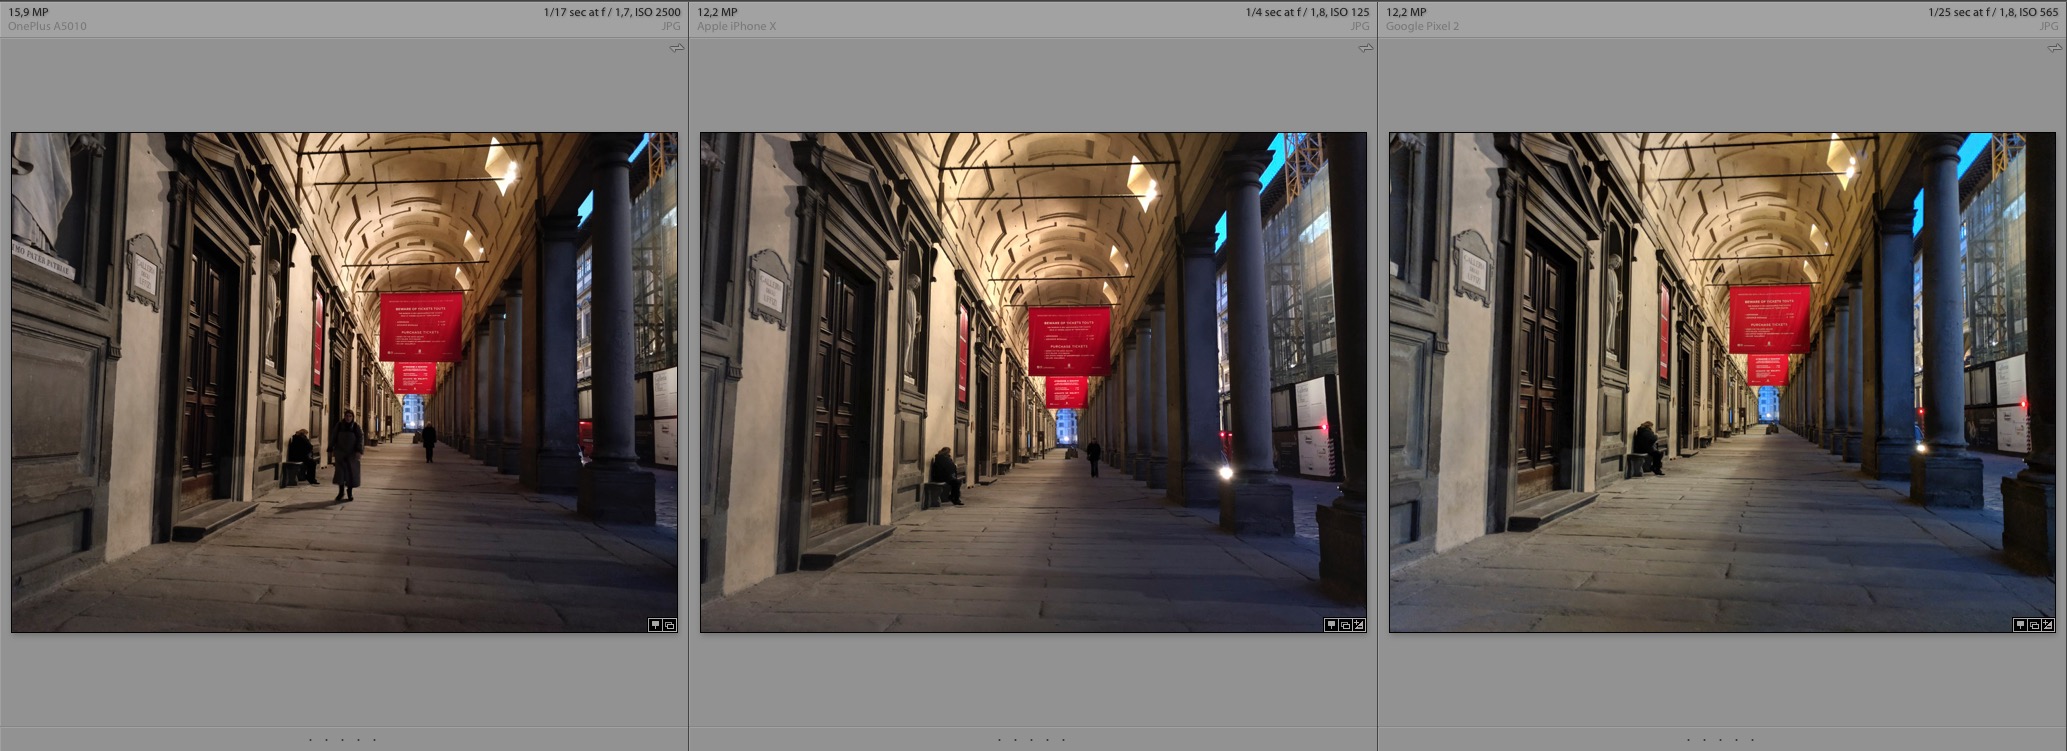 OnePlus 5t vs iPhone X vs Google Pixel 2 lowlight photography test